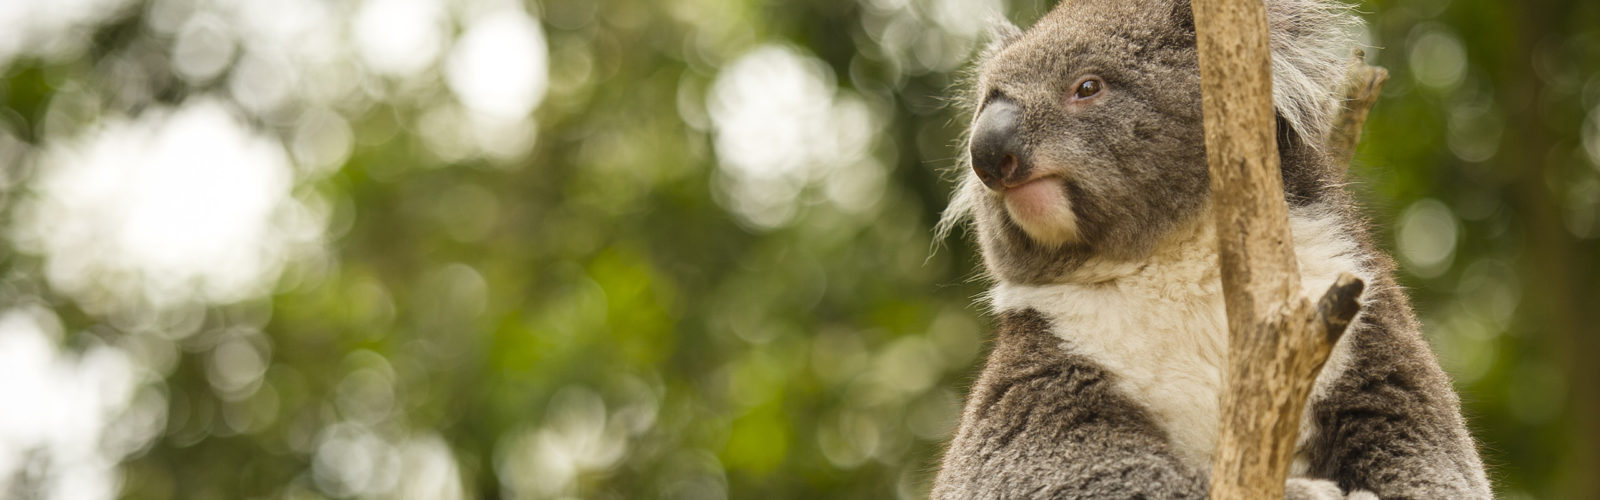 A Koala sitting in a tree in a National Park near Ballarat, Victoria, Australia.